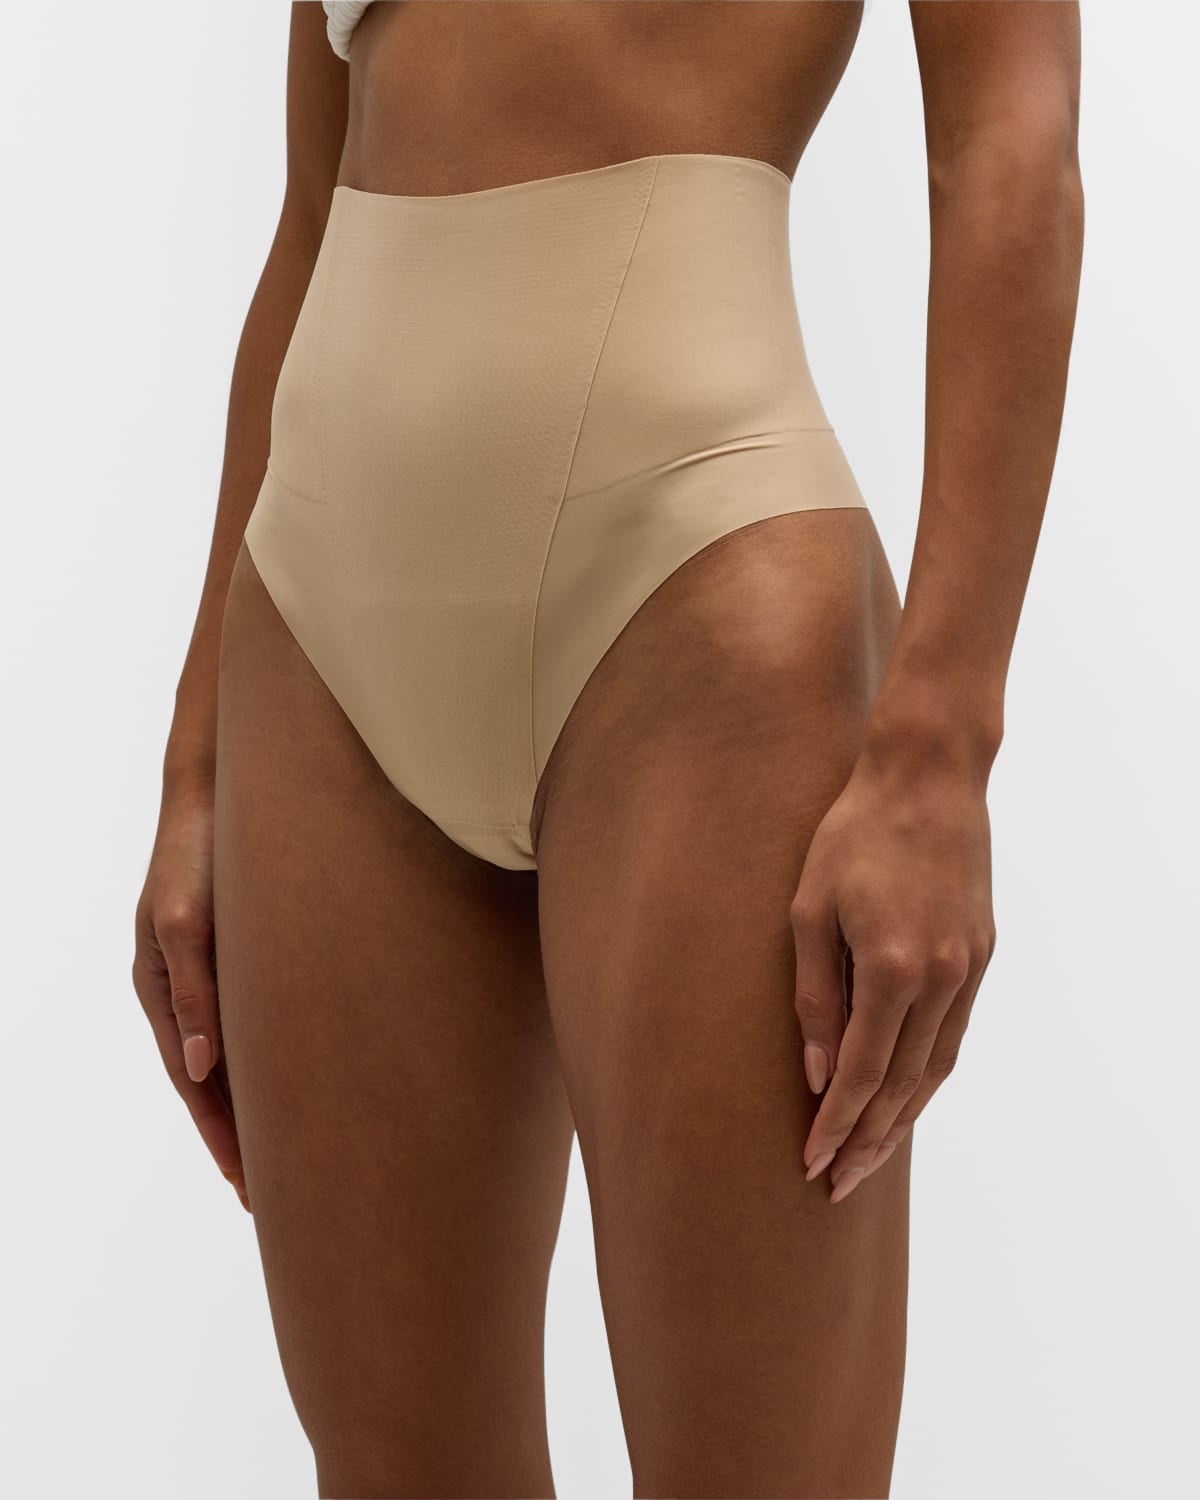 GAP GapBody Women's Breathe Thong Underwear GPW00183 - Macy's